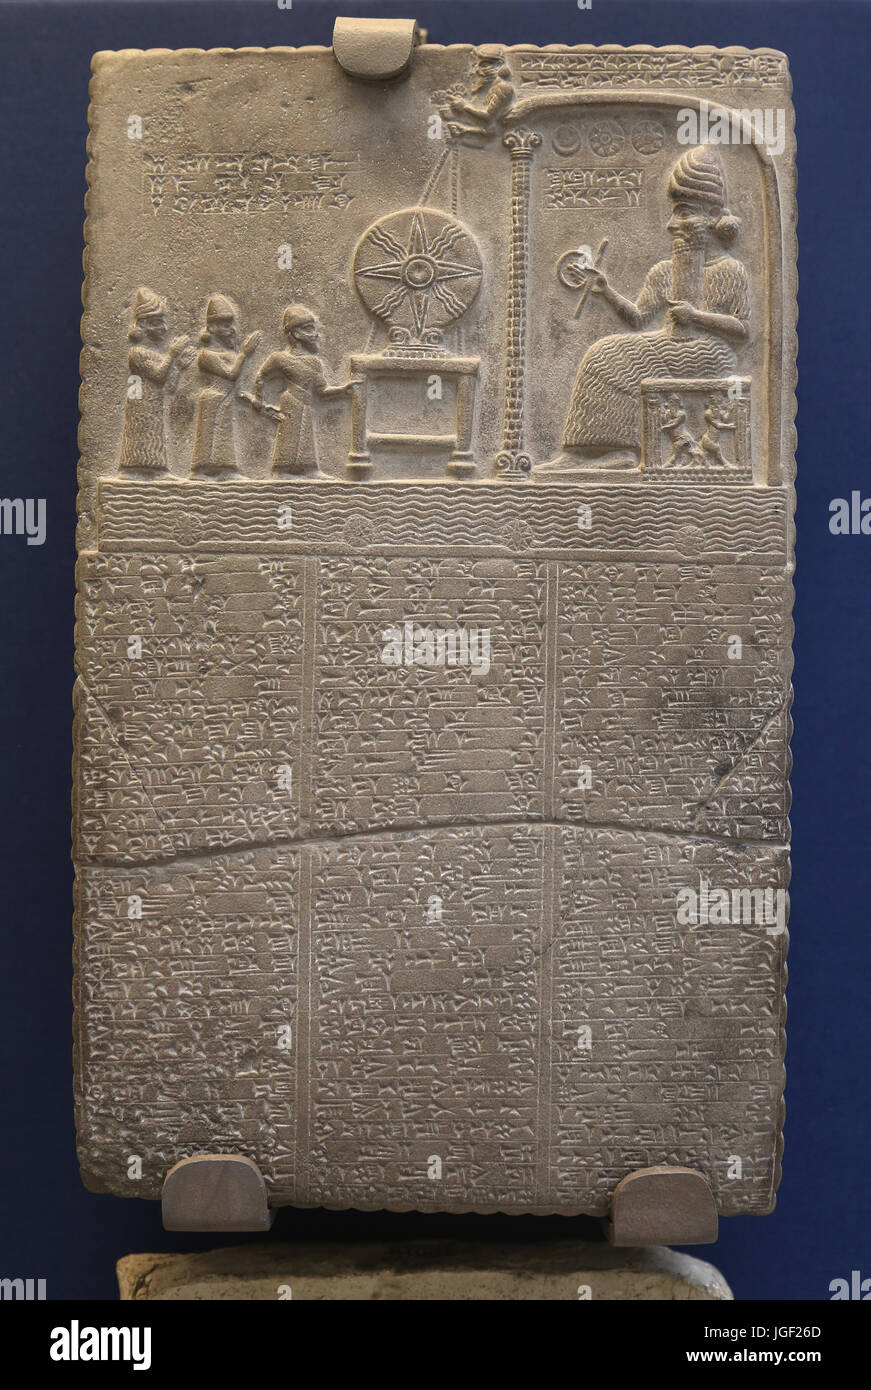 Sonnengott Tablet. König Nabu-Apla-Iddina feiert Installation Statue Gottes Schamasch. 860-850 V. CHR.. Sippar, Irak. British Museum. Stockfoto